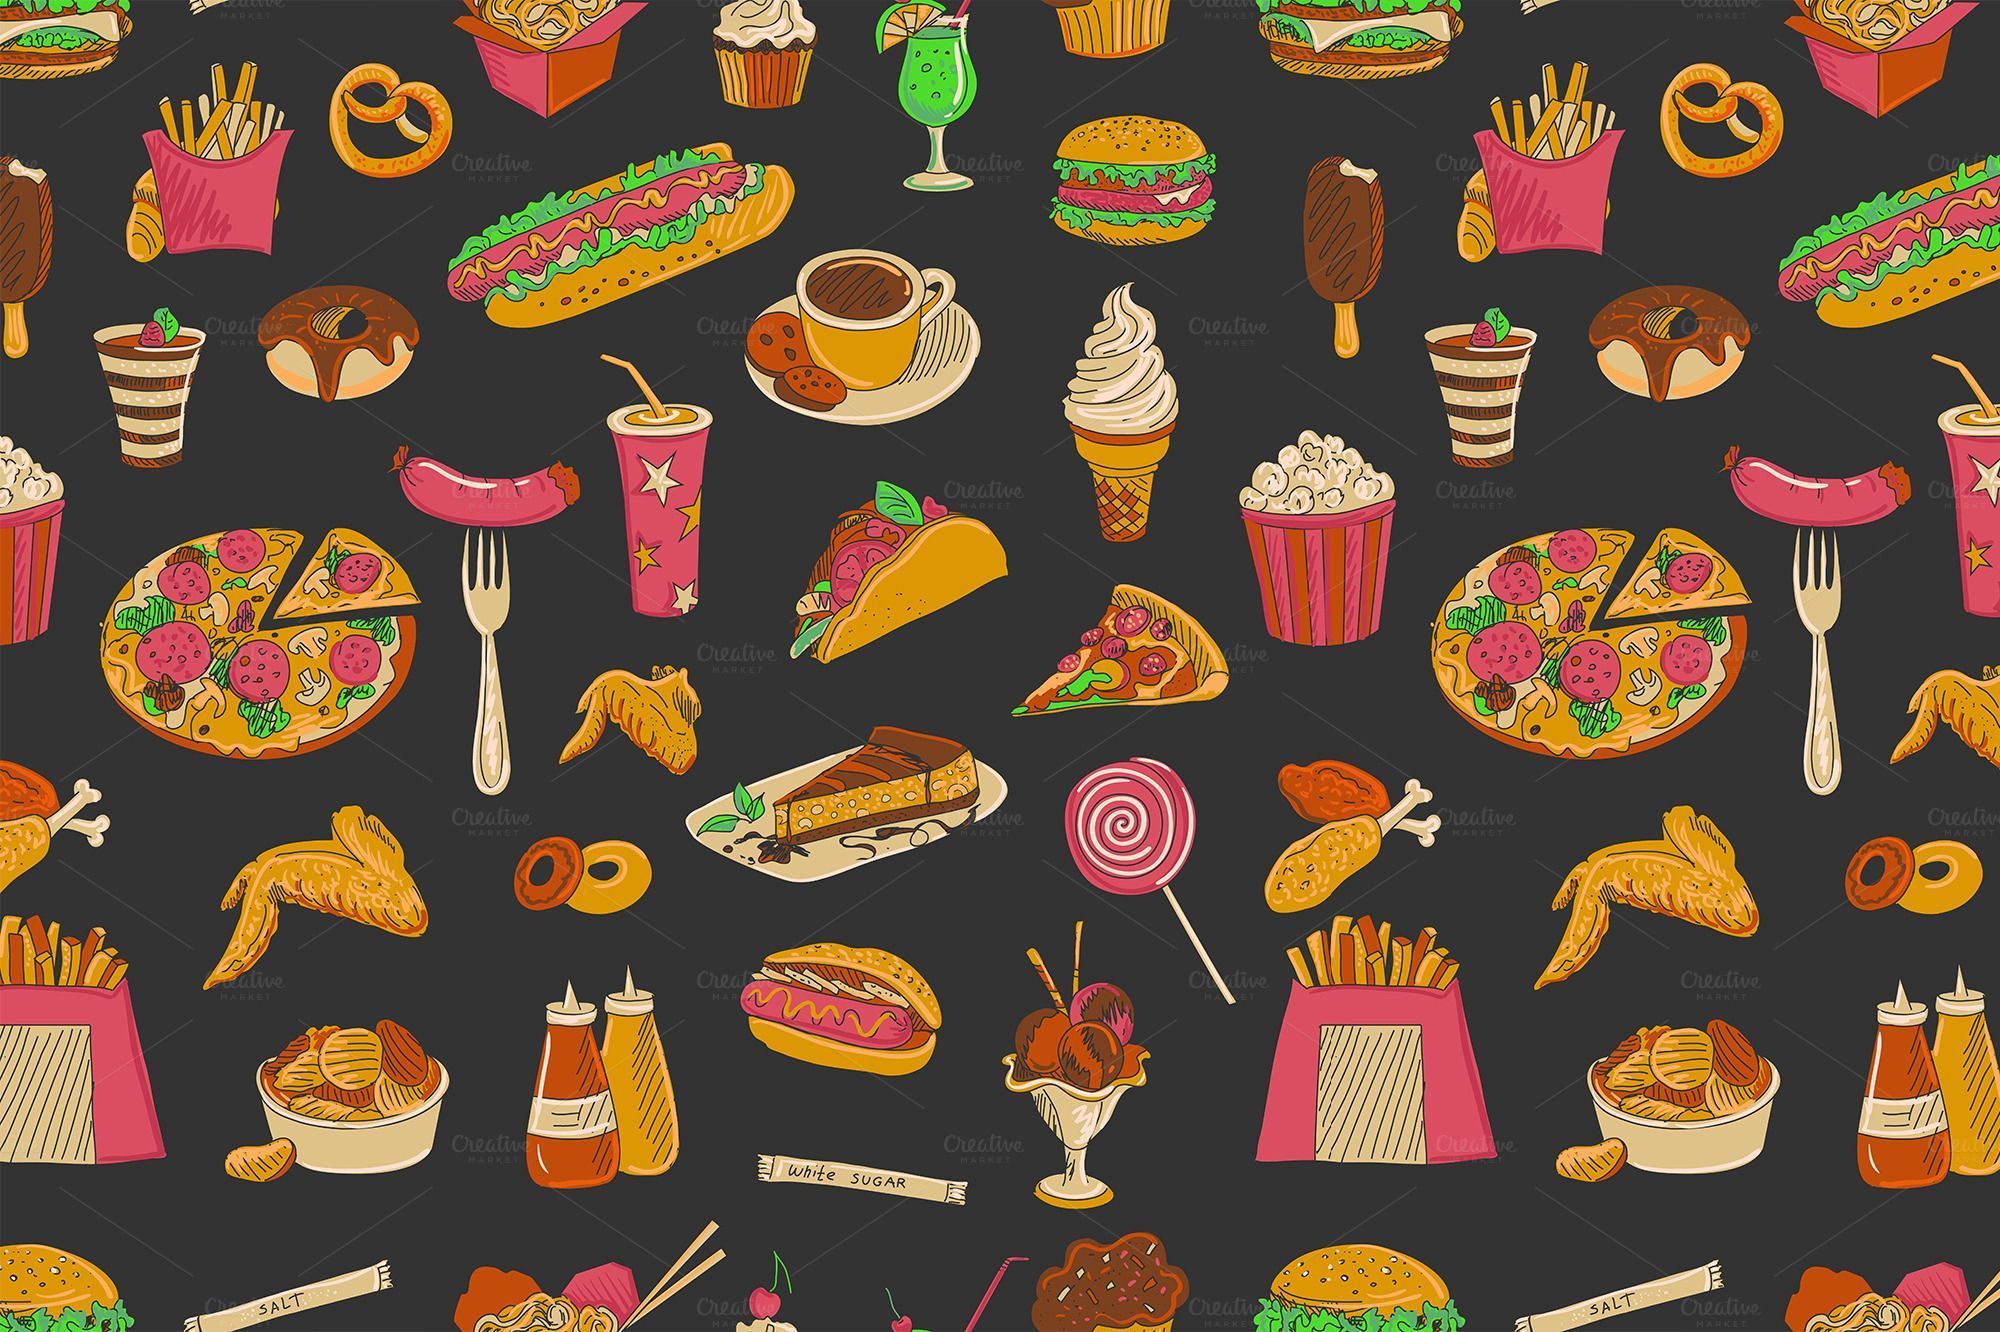 Fast Food Wallpaper Images  Free Download on Freepik